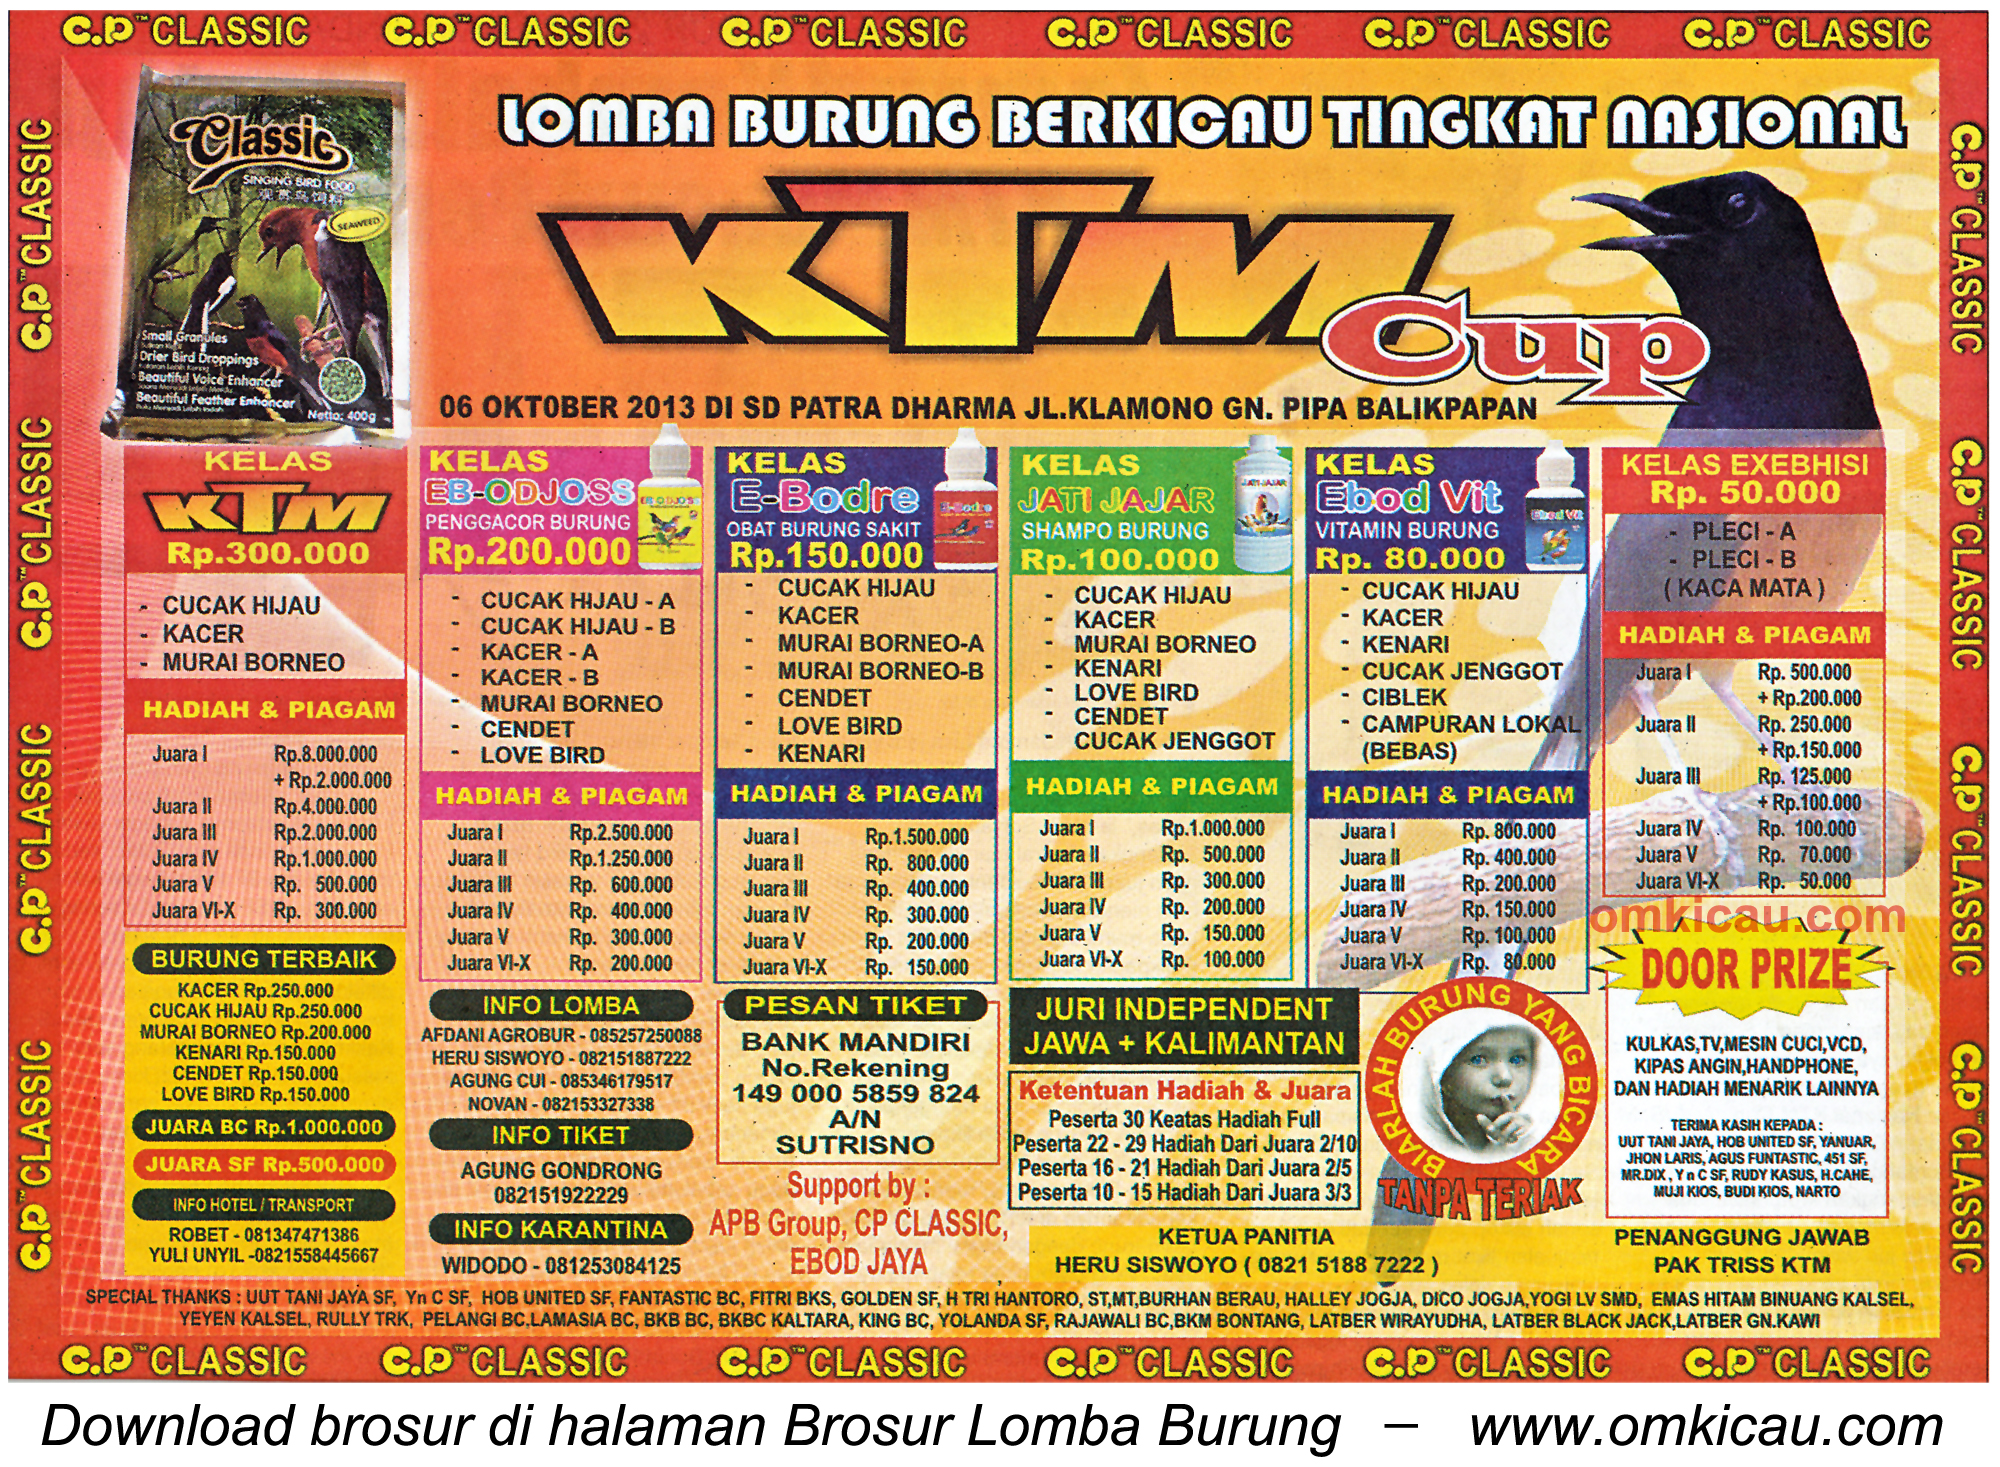 Brosur Lomba Burung Berkicau KTM Cup, Balikpapan, 6 Oktober 2013